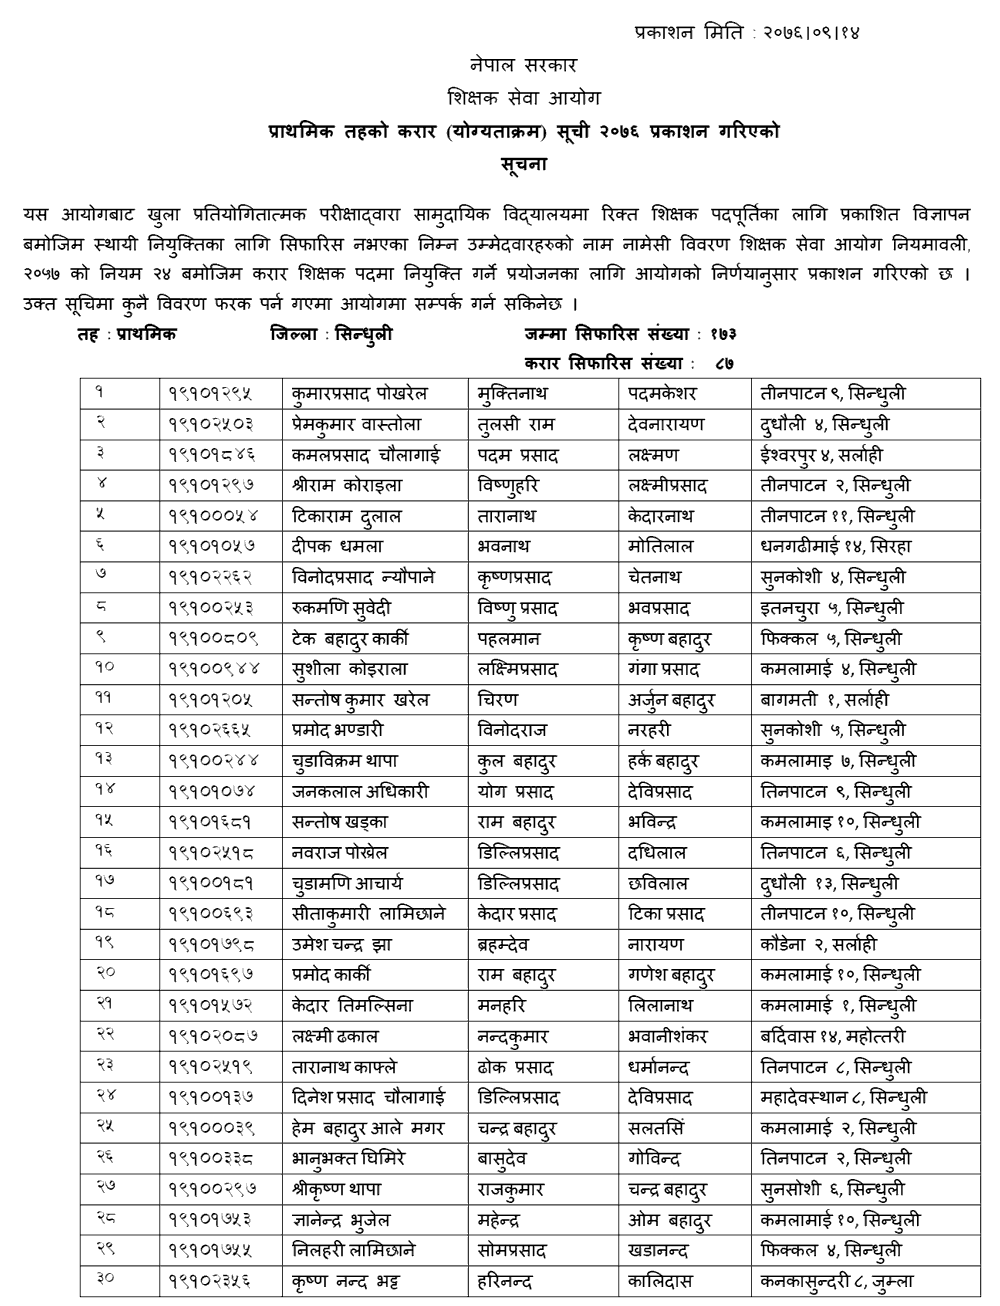 TSC Published Primary Level Contract List of Rasuwa, Ramechhap, Dhanusha and Sindhuli